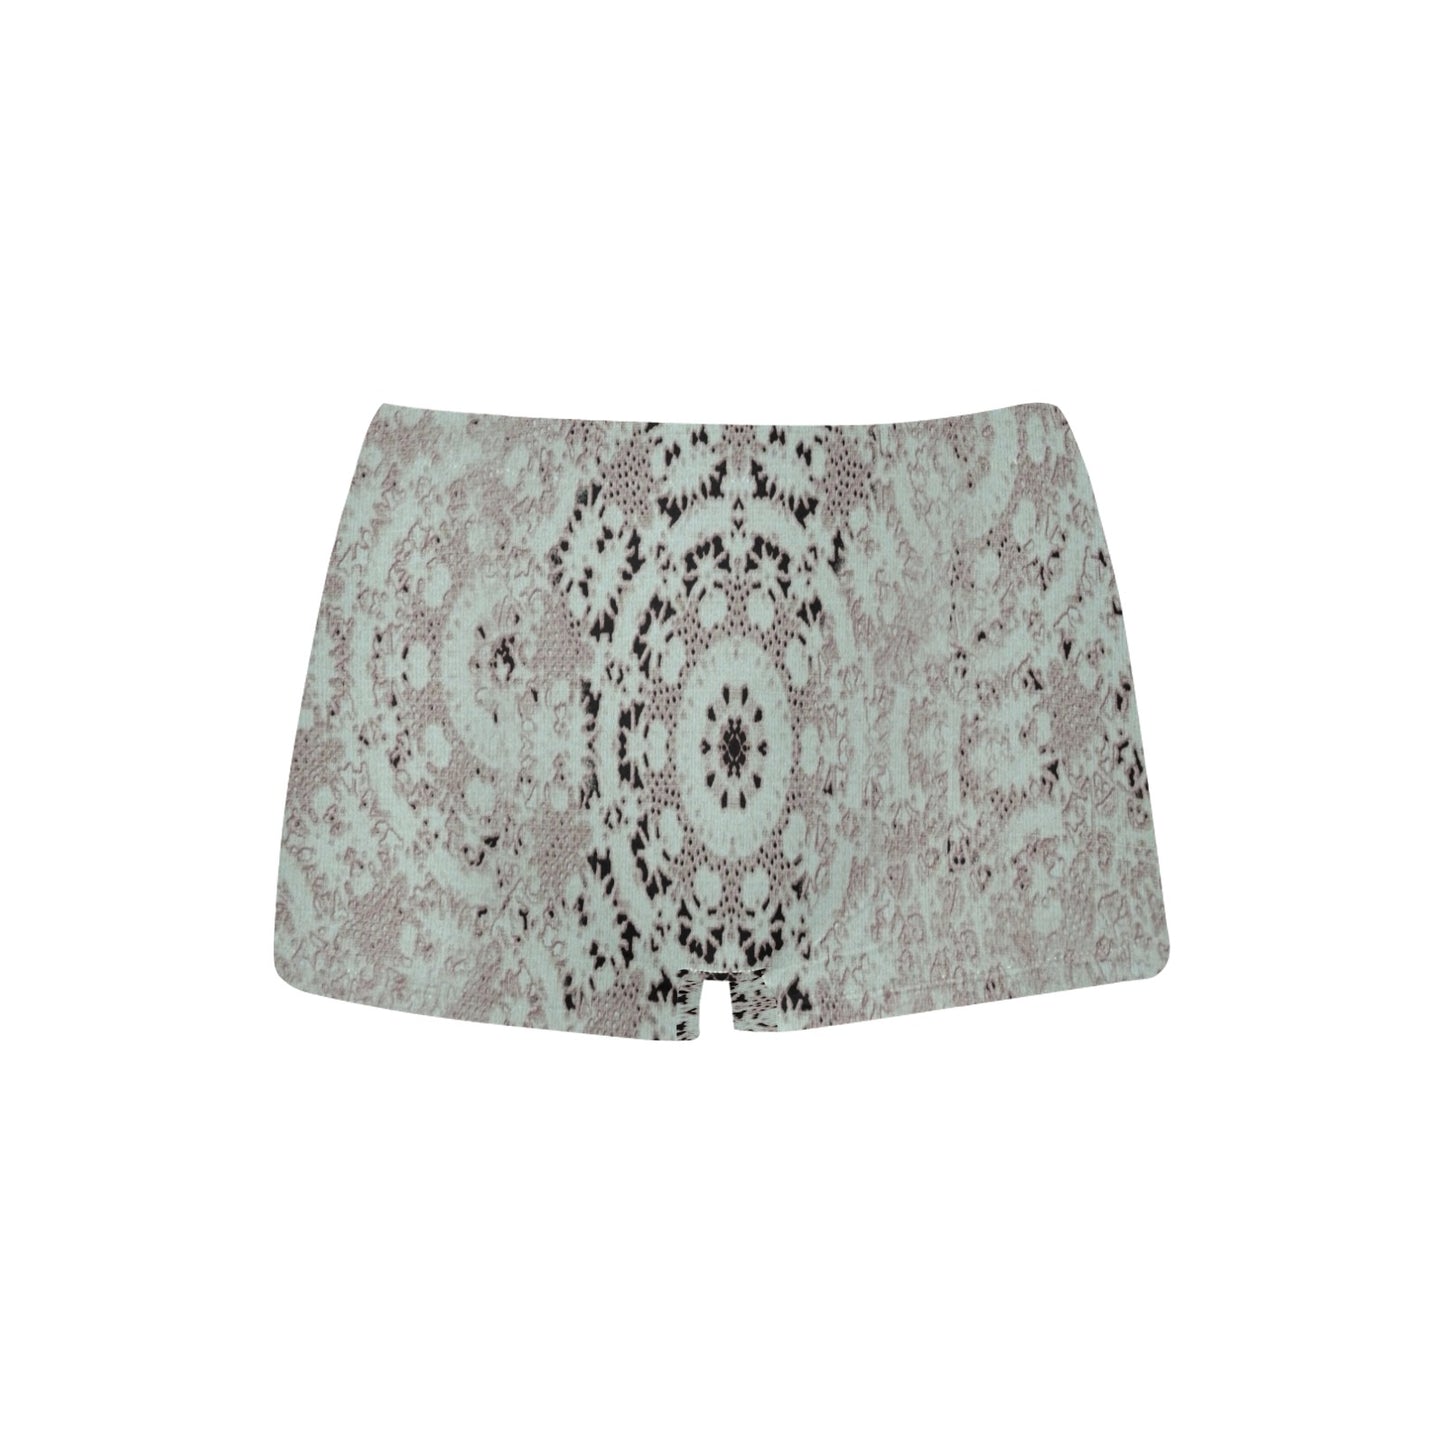 Printed Lace Boyshorts, daisy dukes, pum pum shorts, shortie shorts , design 51